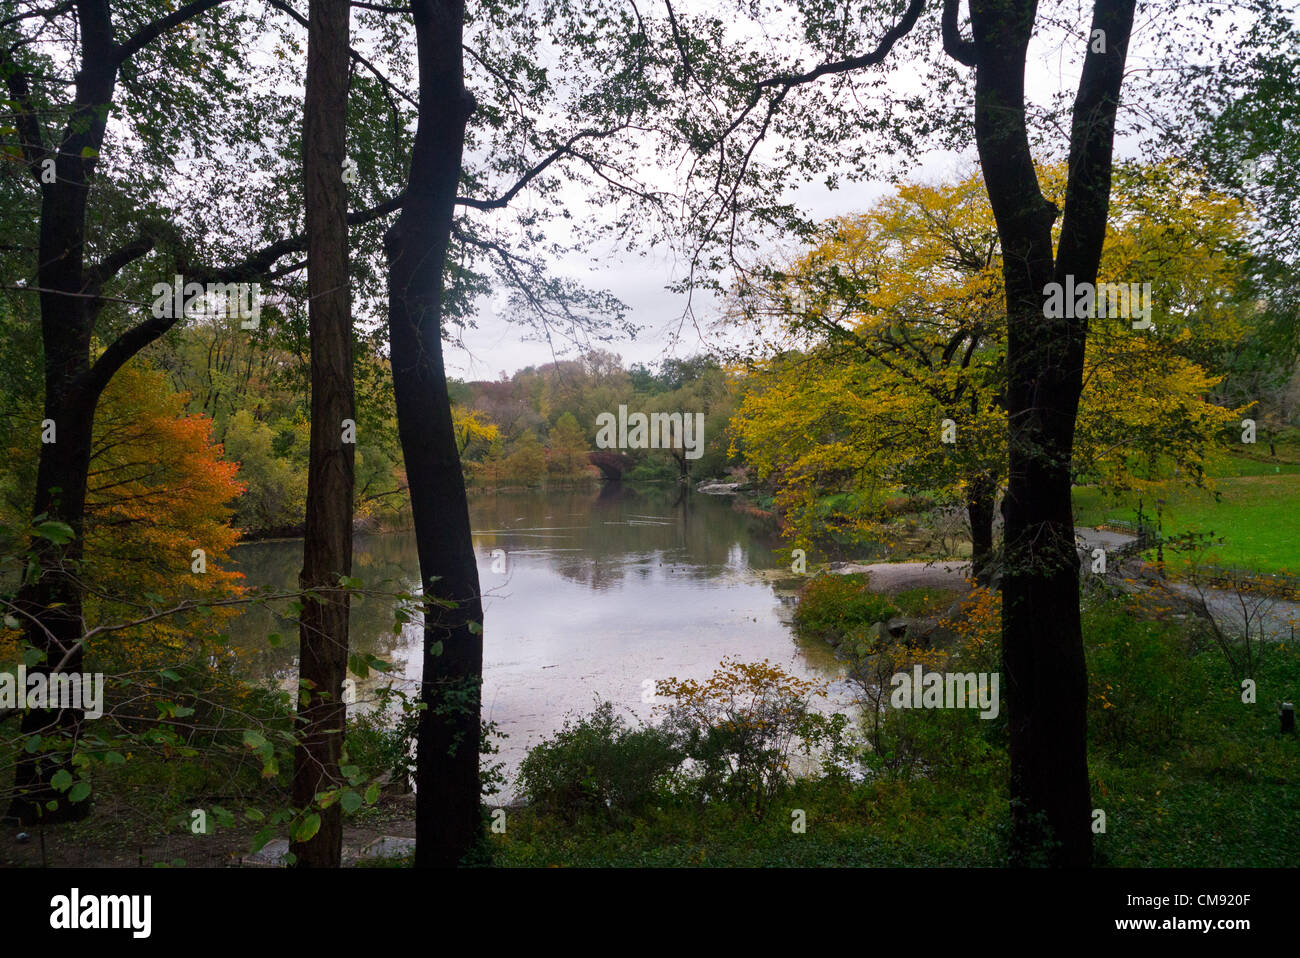 NEW YORK - OCTOBER 30: 2012 Devastation visible in Central Park one day ...